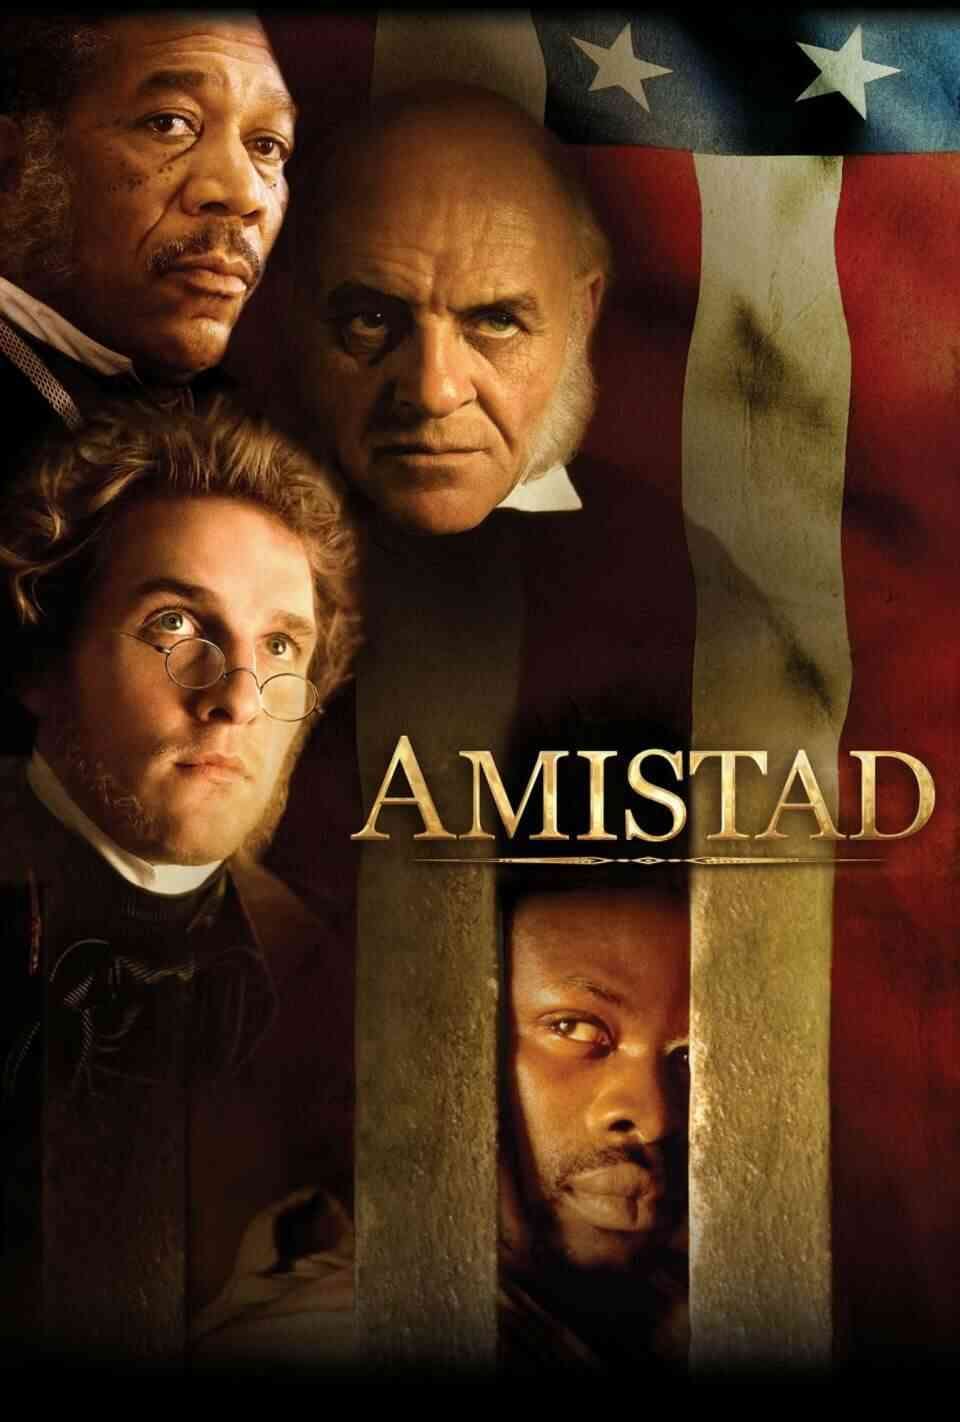 Read Amistad screenplay.